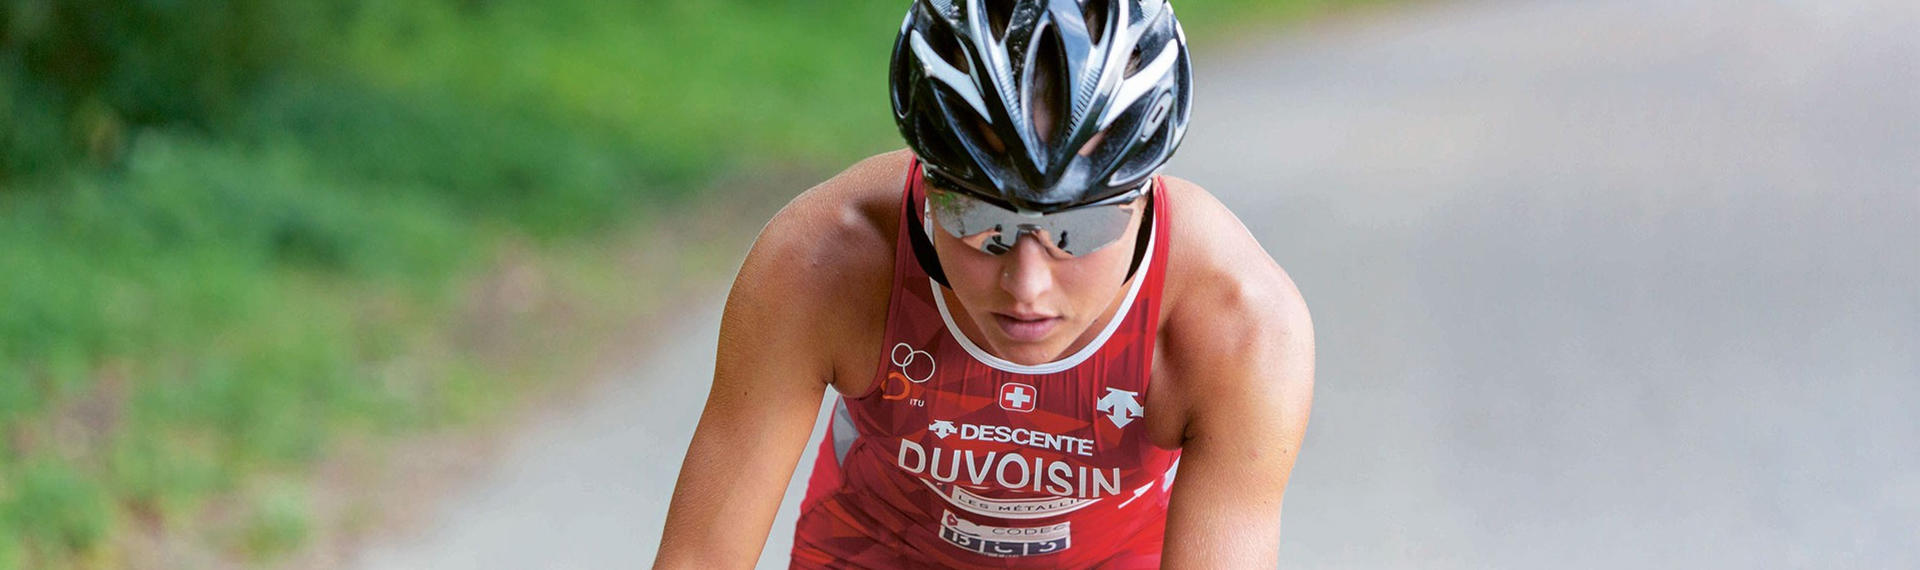 Loanne Duvoisin, Cross-triathlon : banque privée Bonhôte